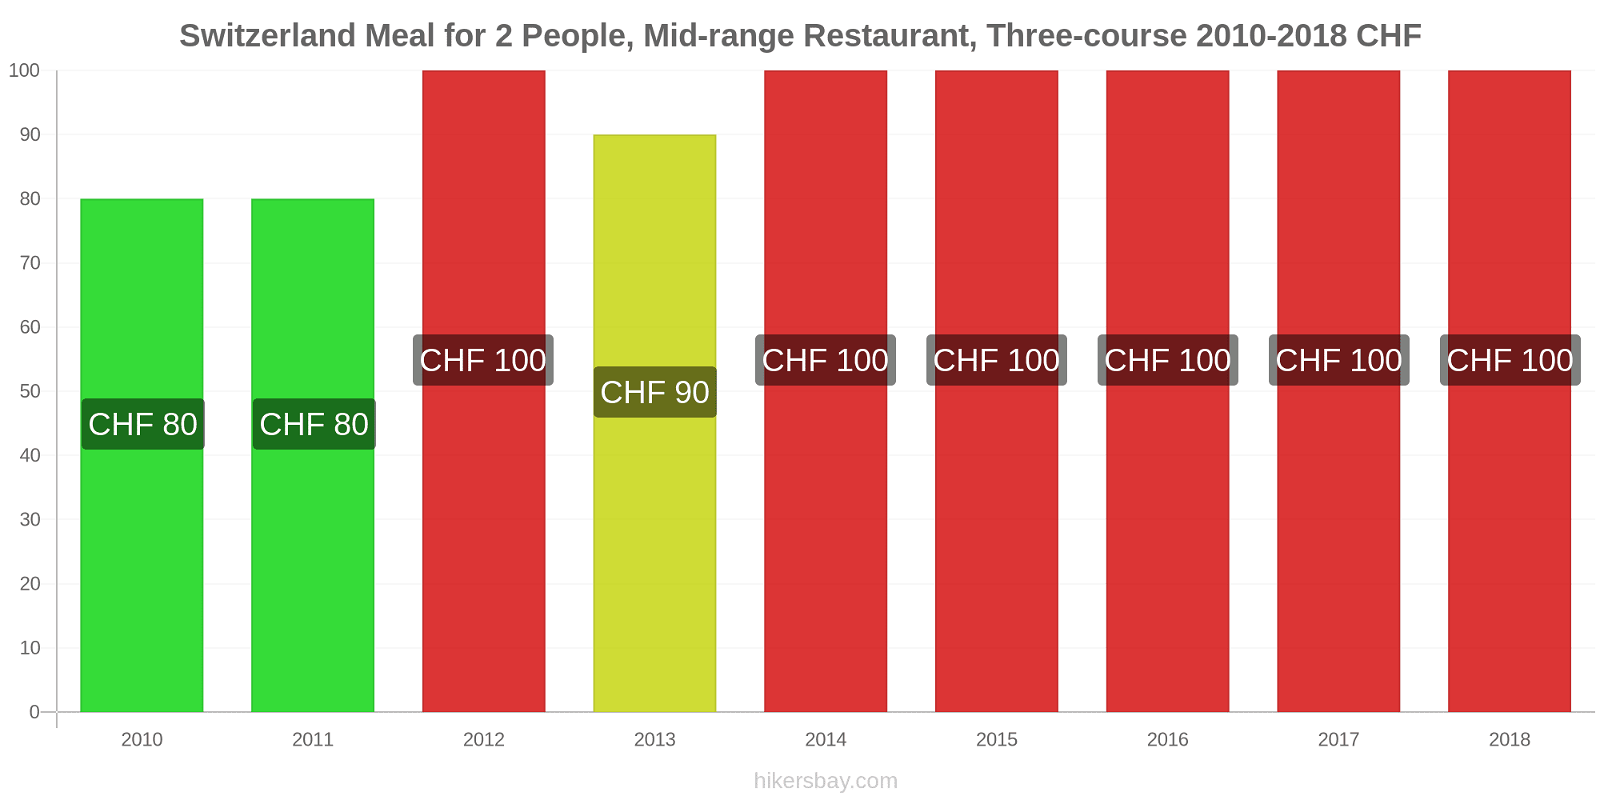 Switzerland price changes Meal for 2 People, Mid-range Restaurant, Three-course hikersbay.com